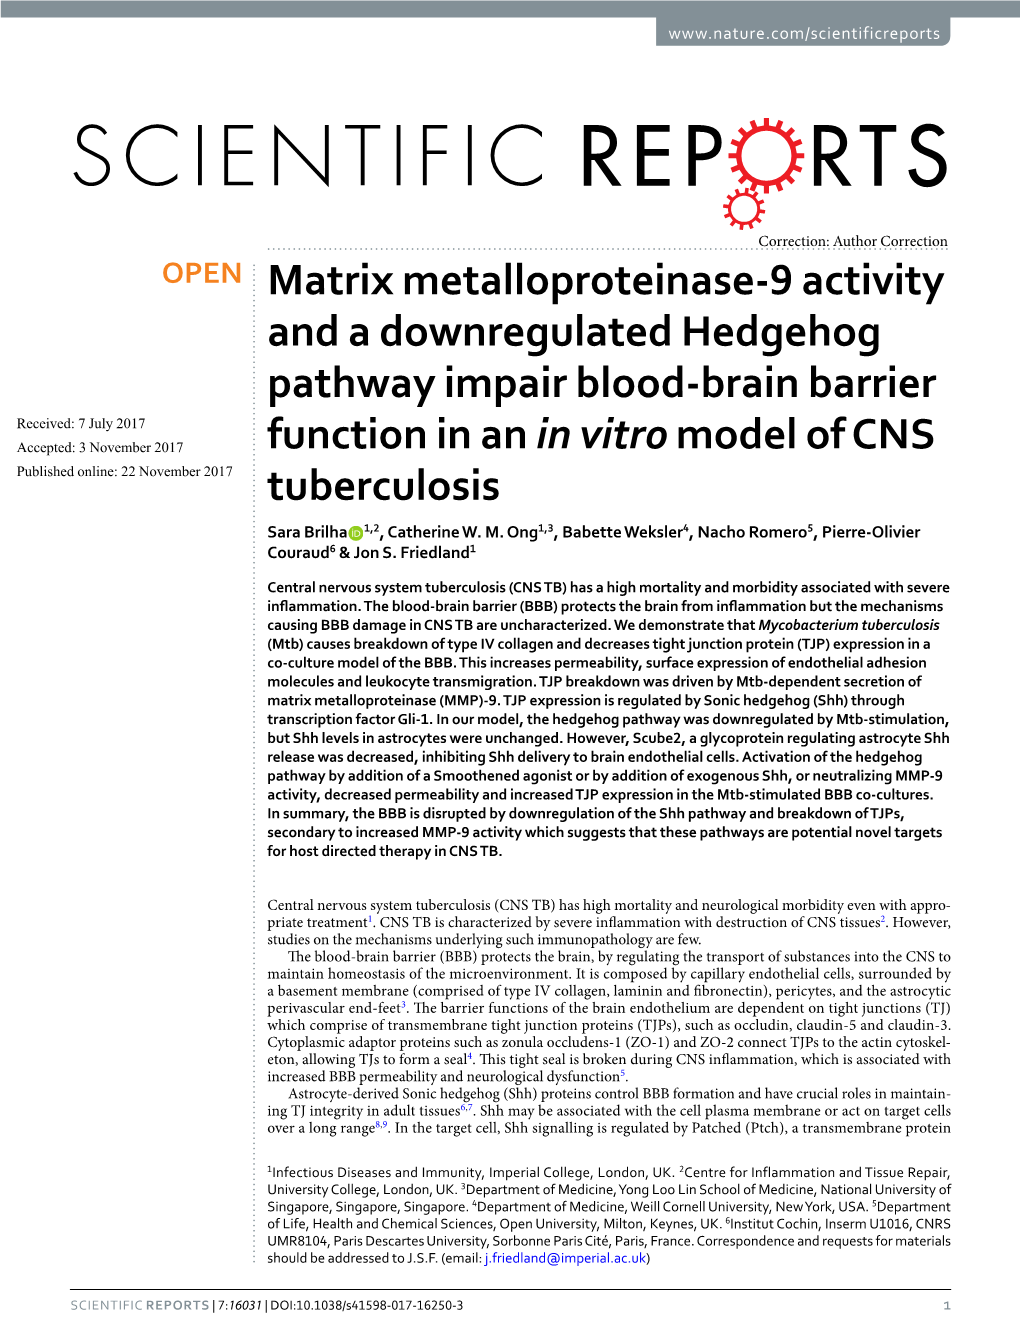 Matrix Metalloproteinase-9 Activity and a Downregulated Hedgehog